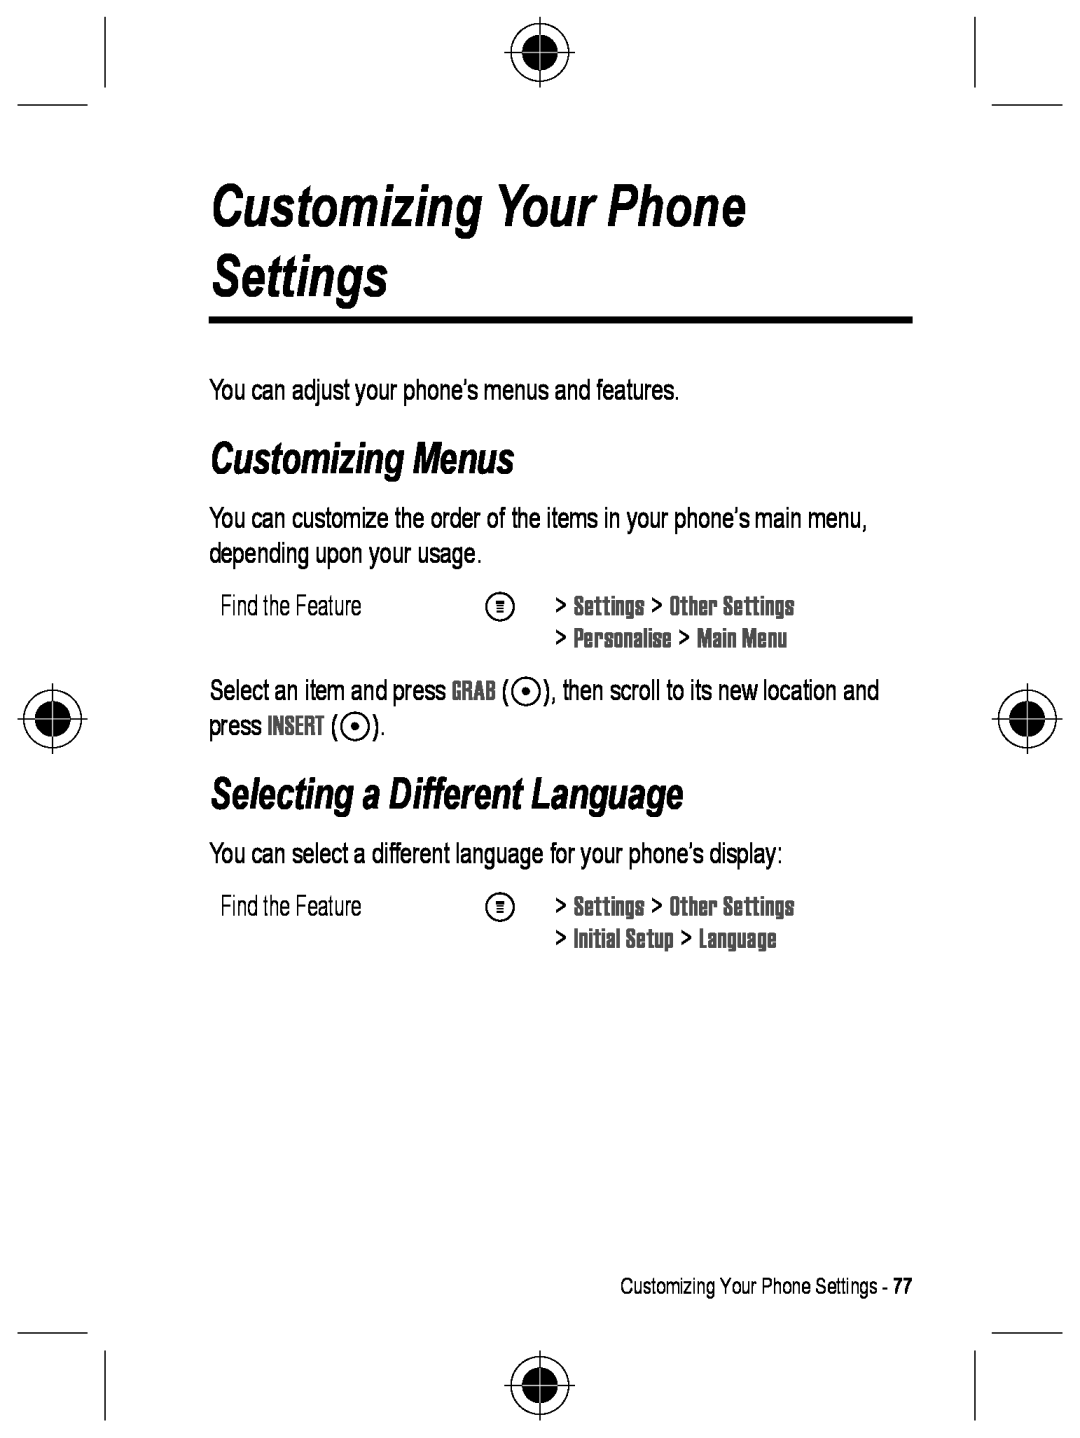 Motorola C330 Customizing Your Phone Settings, Customizing Menus, Selecting a Different Language, Initial Setup Language 